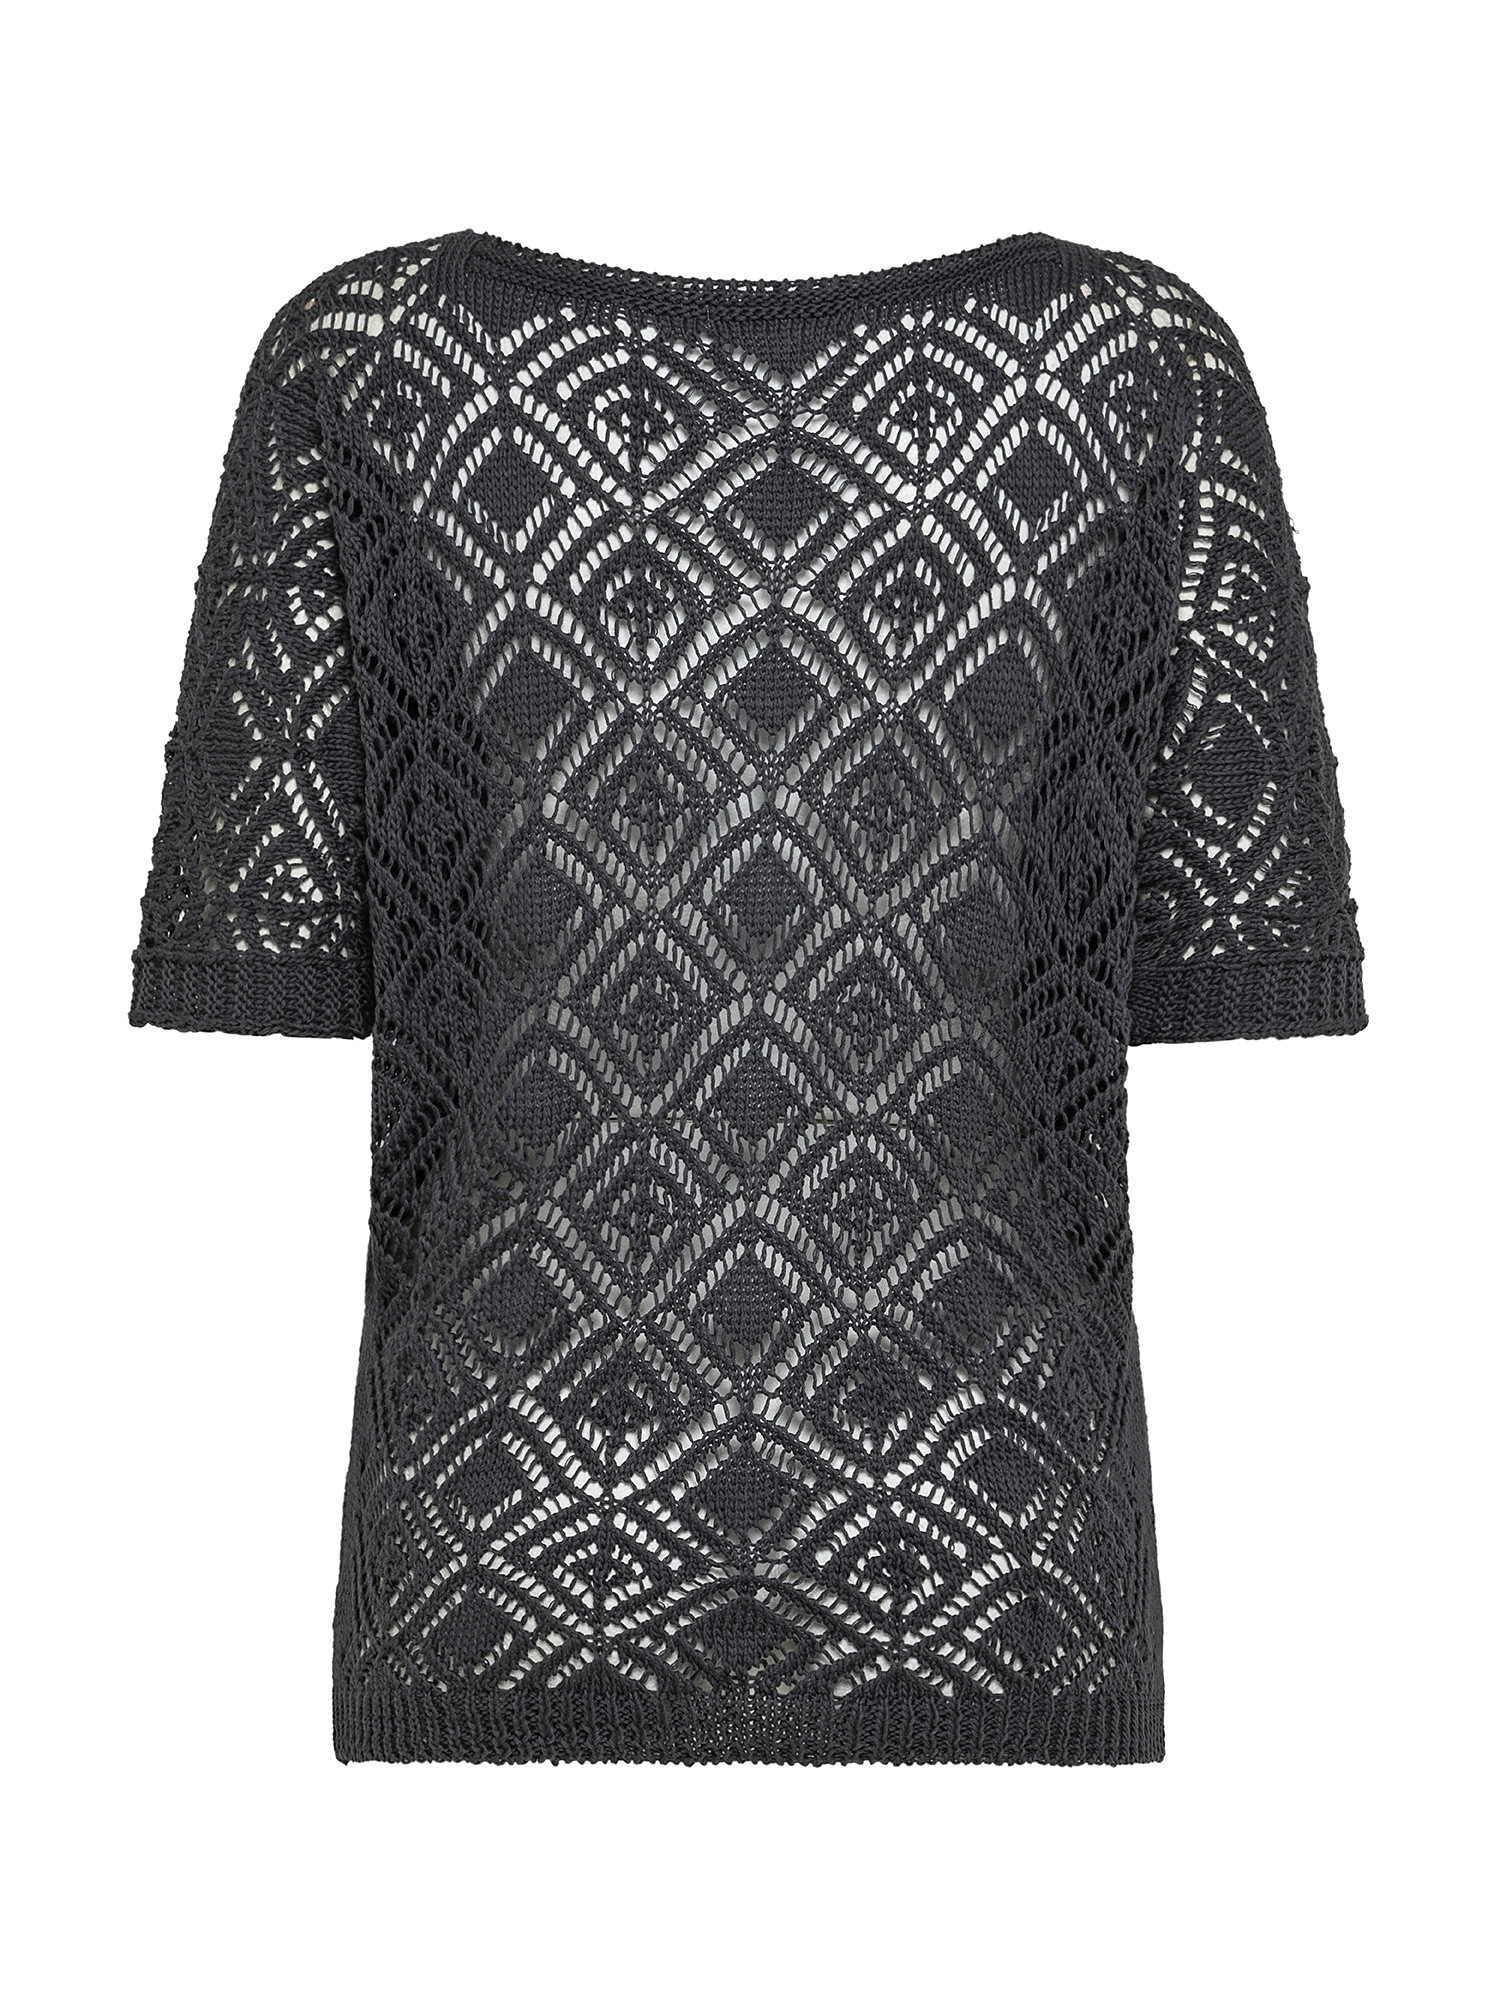 Patterned stitch kimono sweater, Black, large image number 1